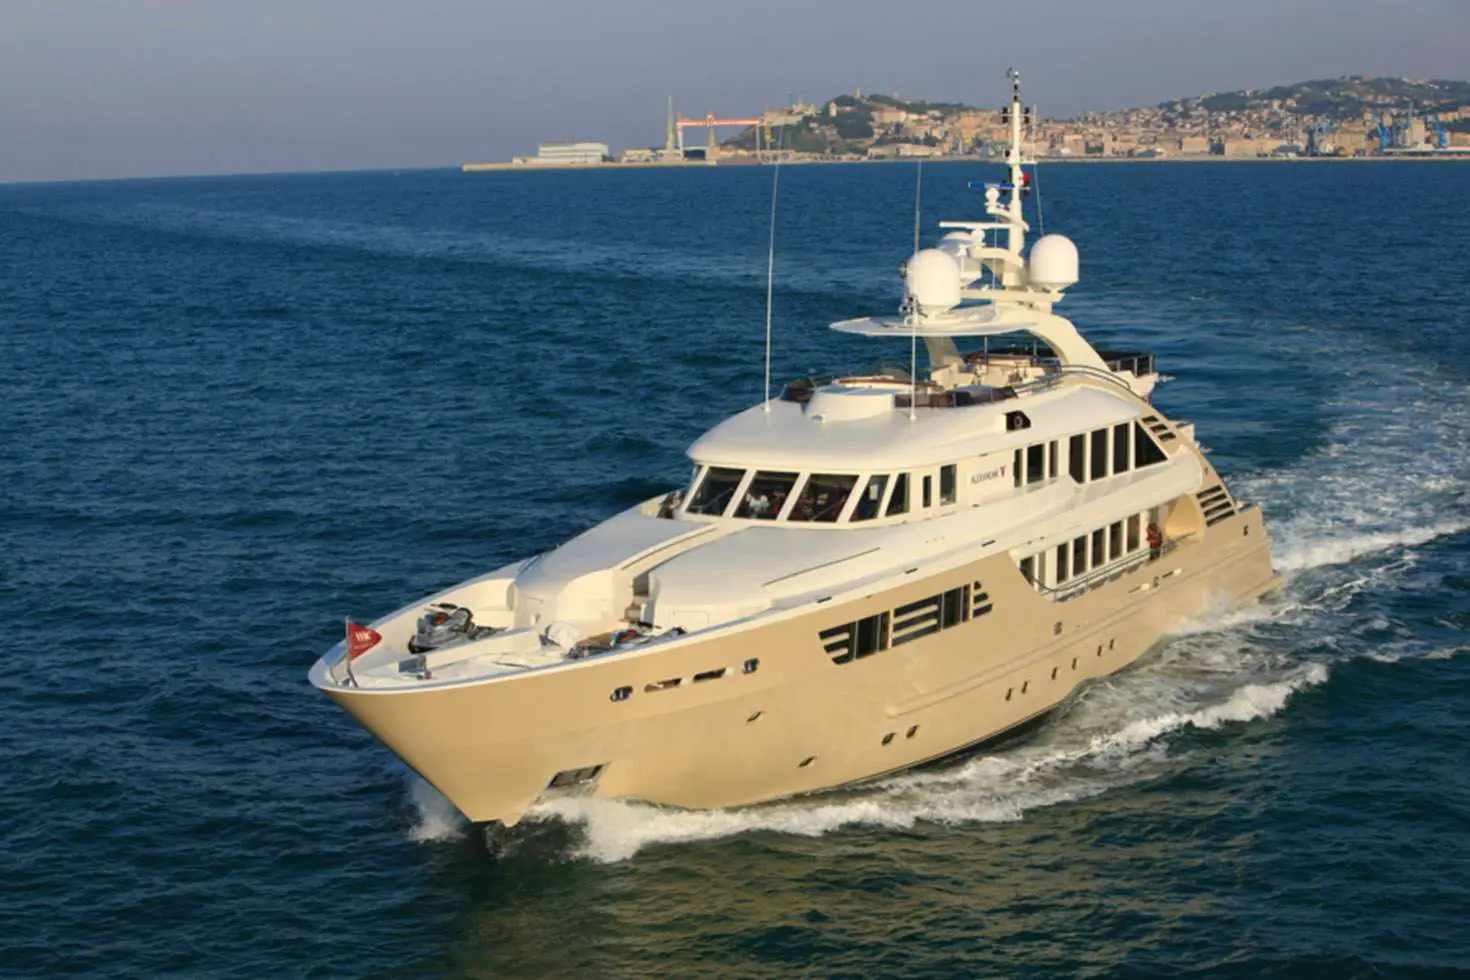 MUSE Yacht • ISA • 2008 • Owner Miodrag Kostic